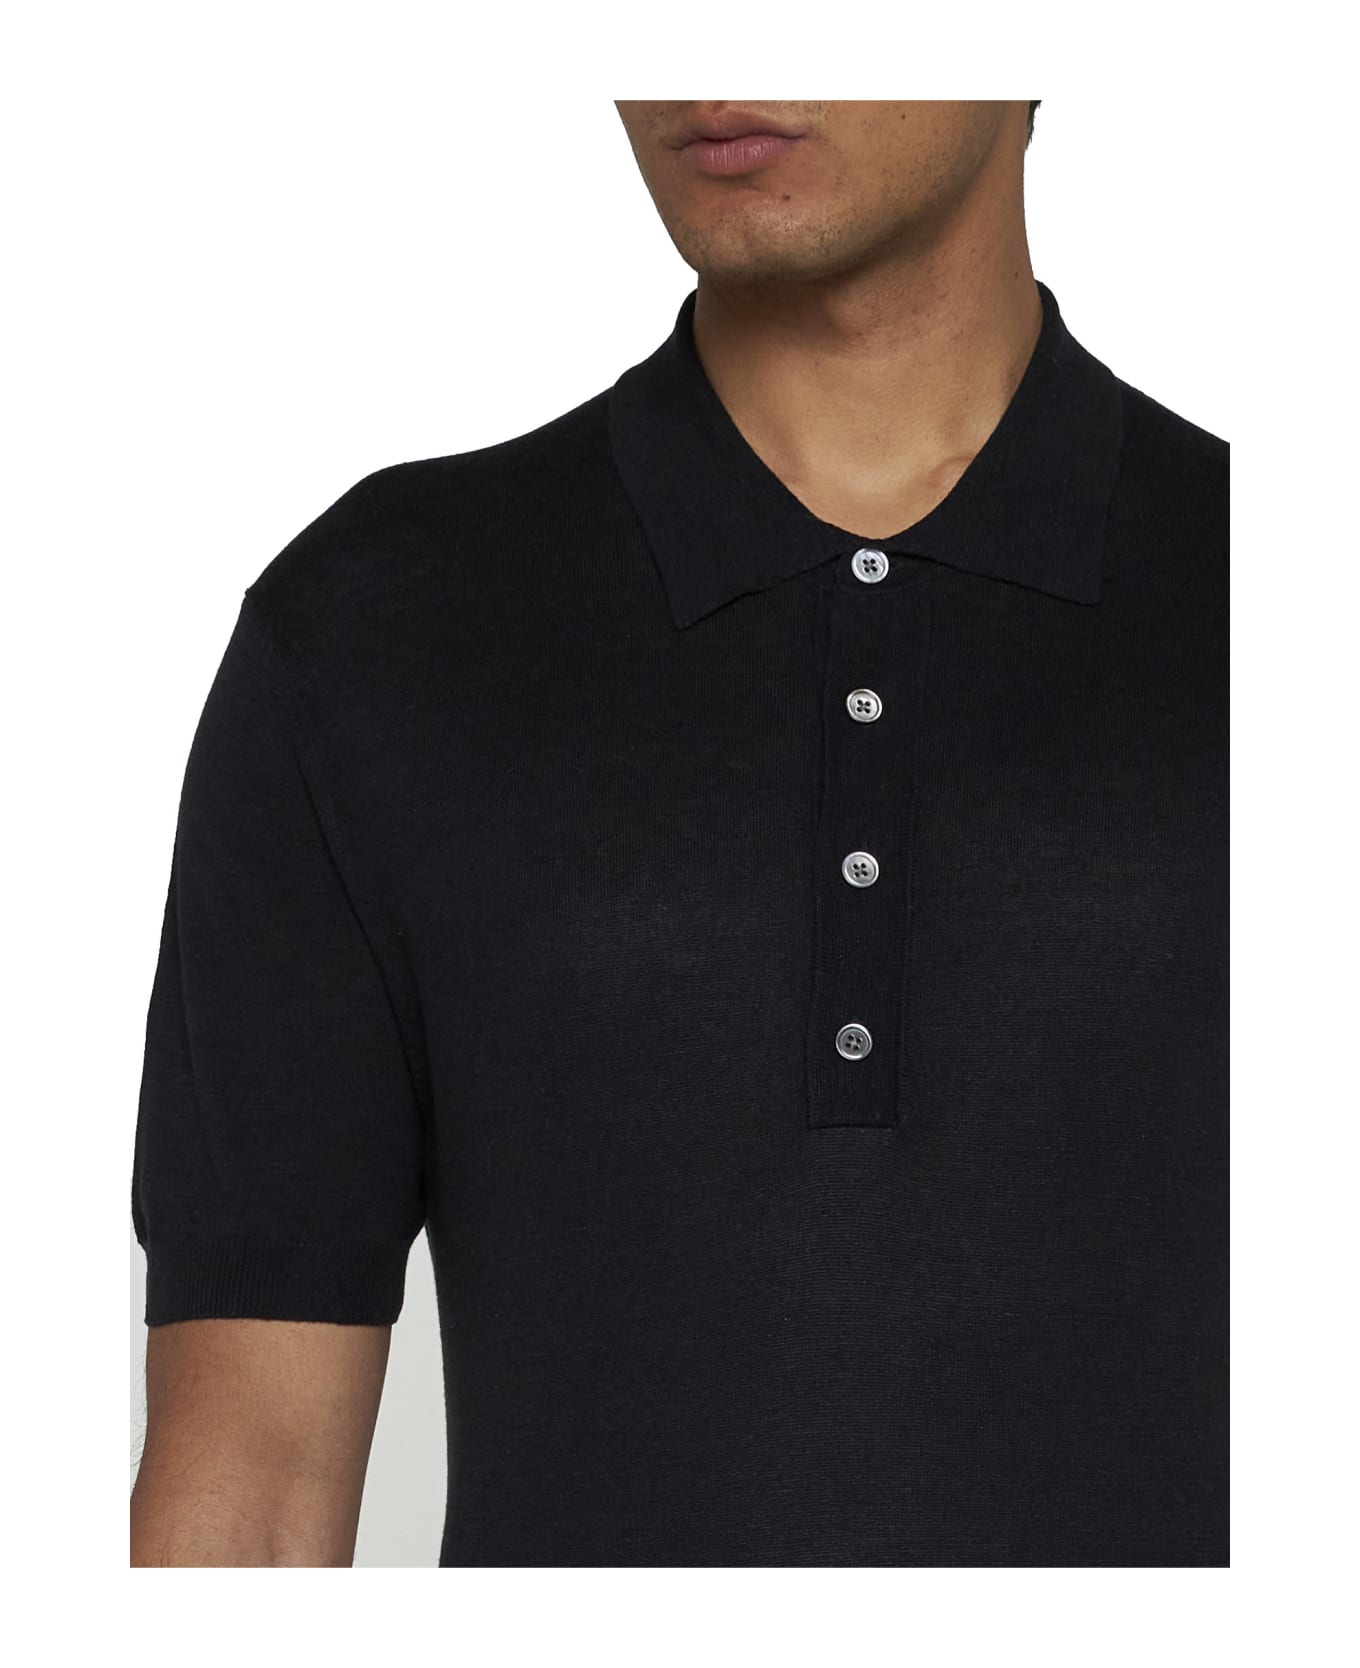 Low Brand Polo Shirt - Jet black